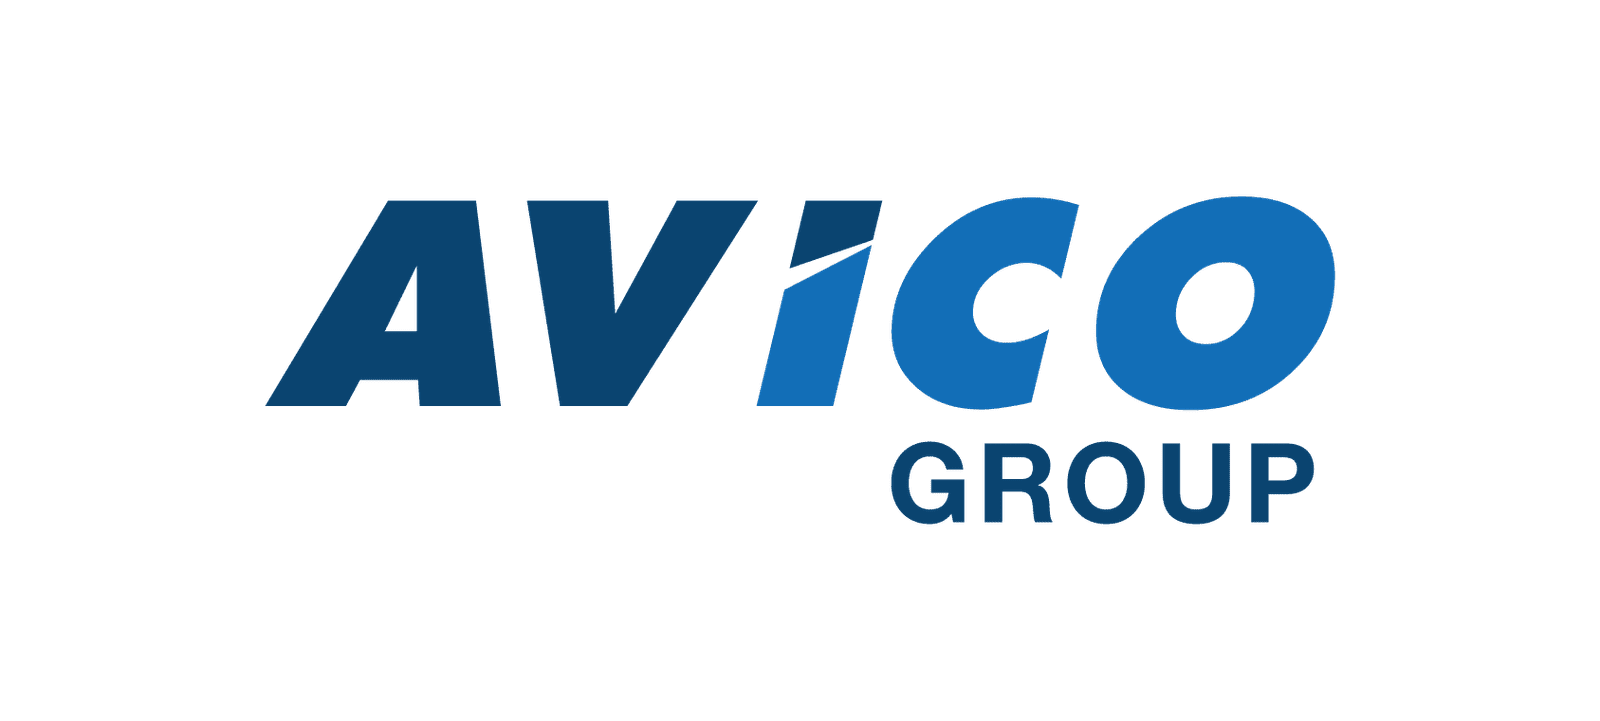 Group_AVICO